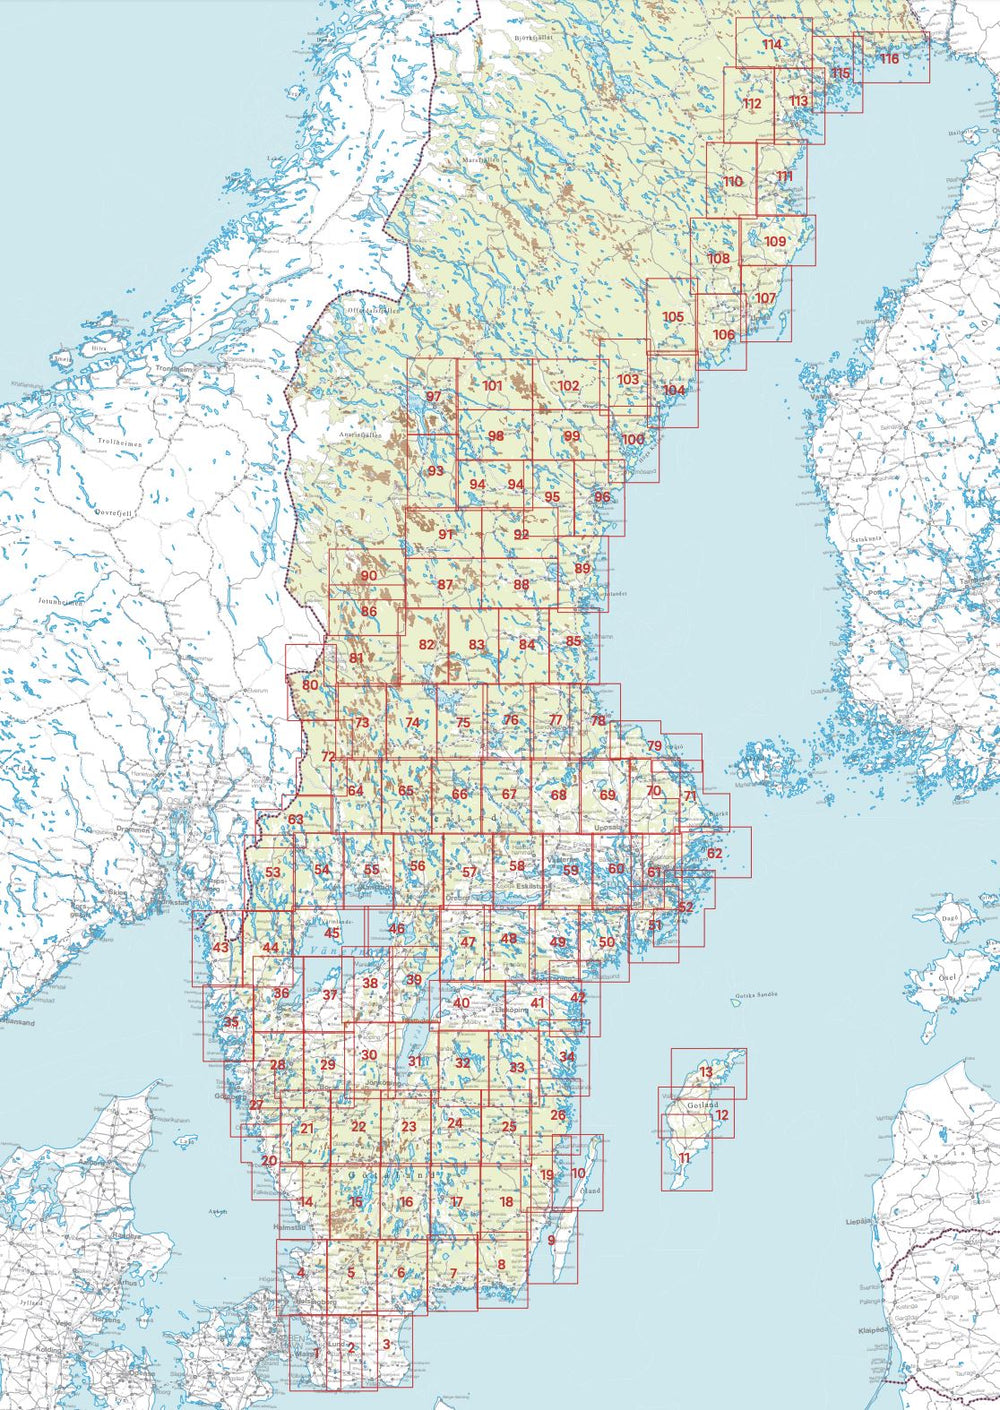 Carte topographique n° 66 - Ludvika (Suède) | Norstedts - Sverigeserien carte pliée Norstedts 